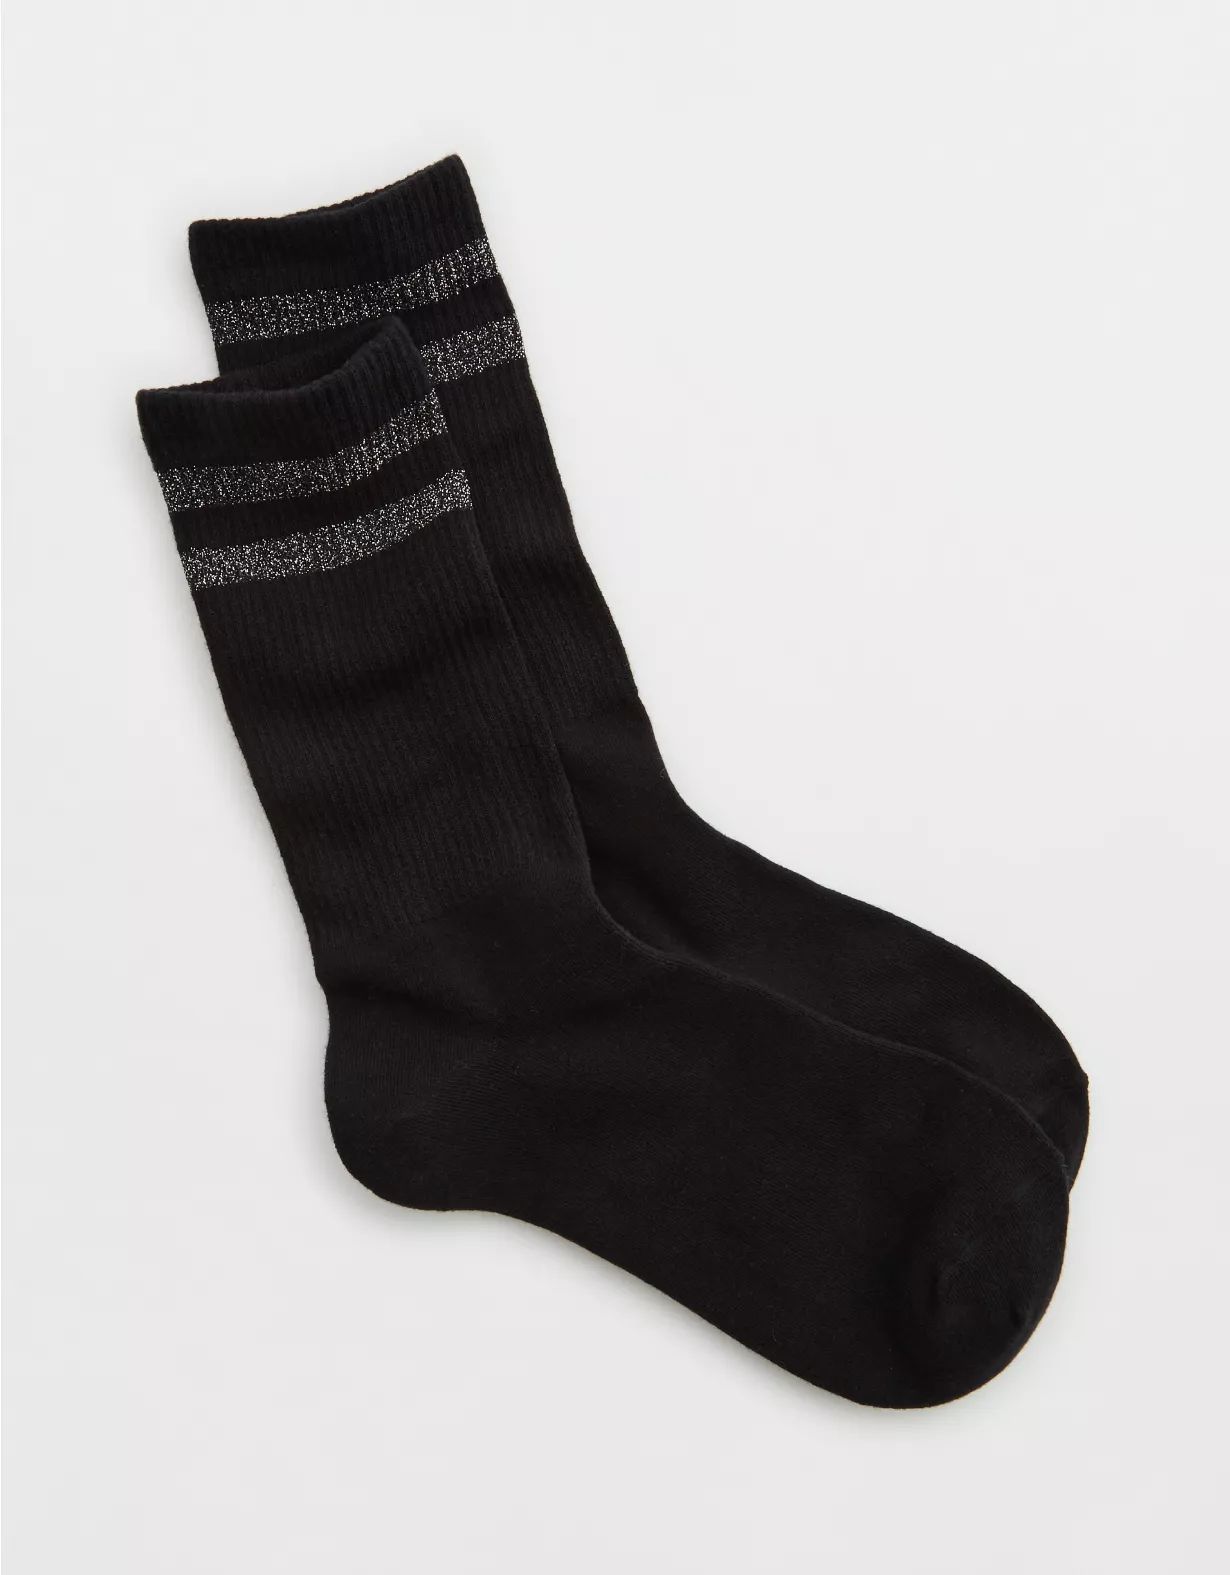 Aerie Ribbed Cotton Crew Socks | Aerie